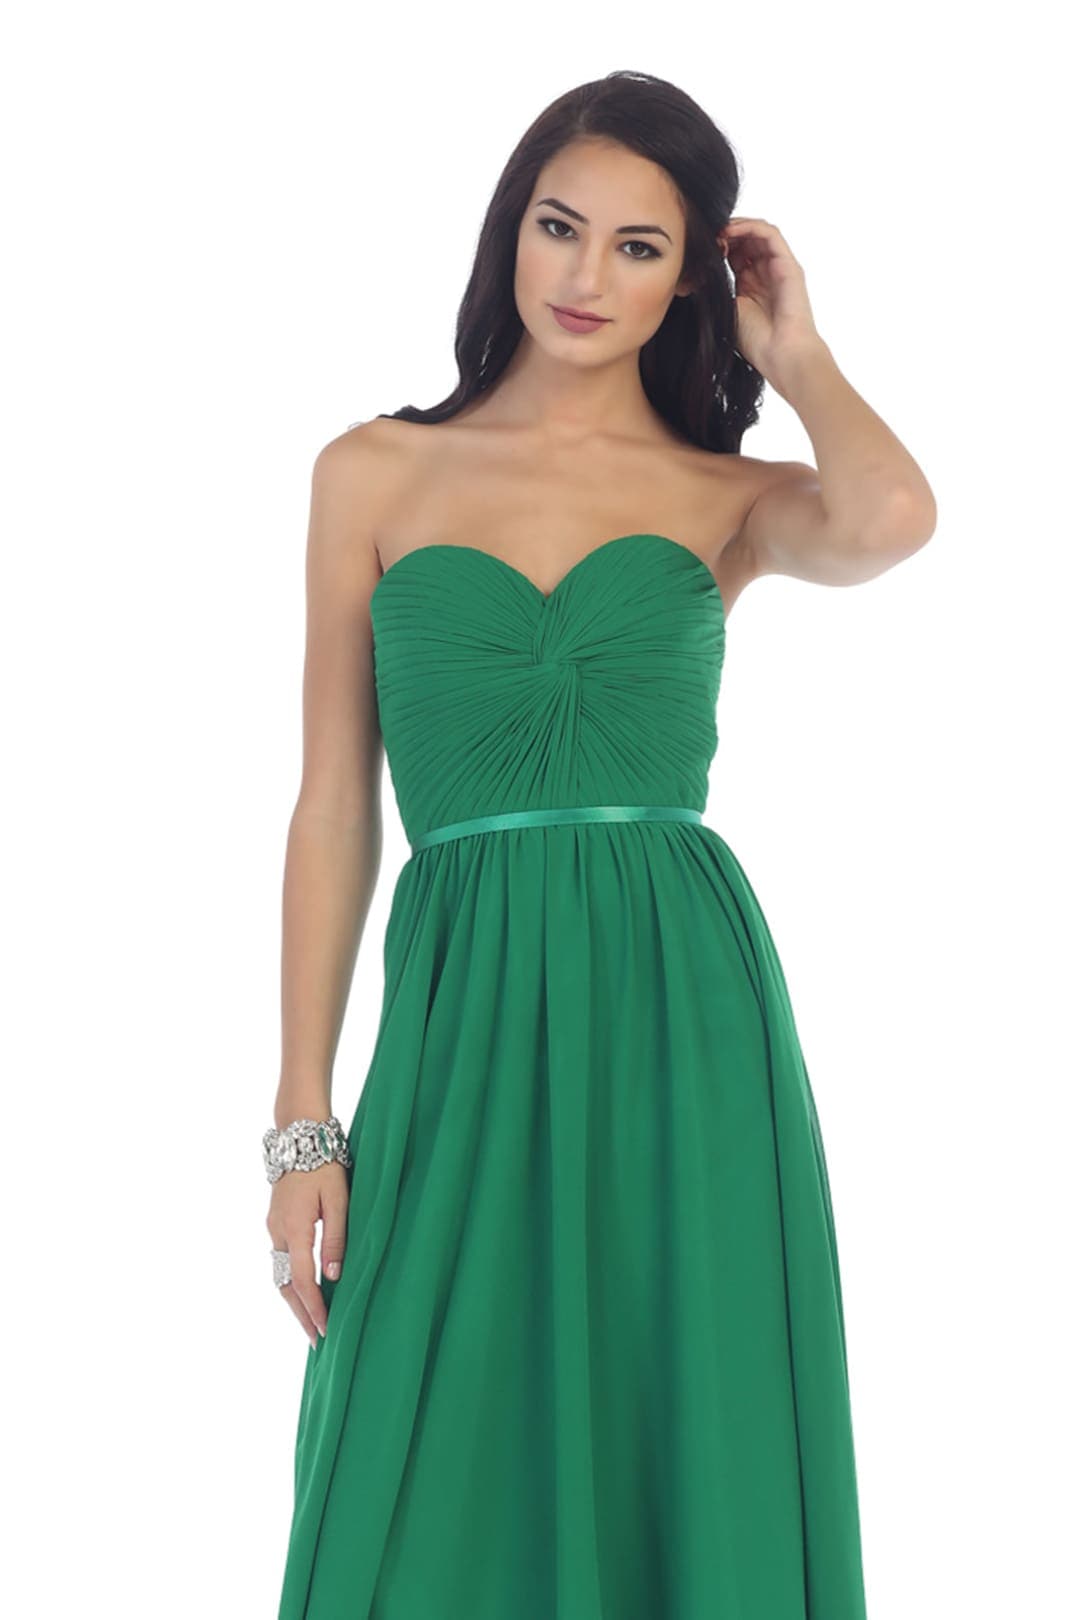 Lace up Back Bridesmaids Dress - Emerald Green / 4